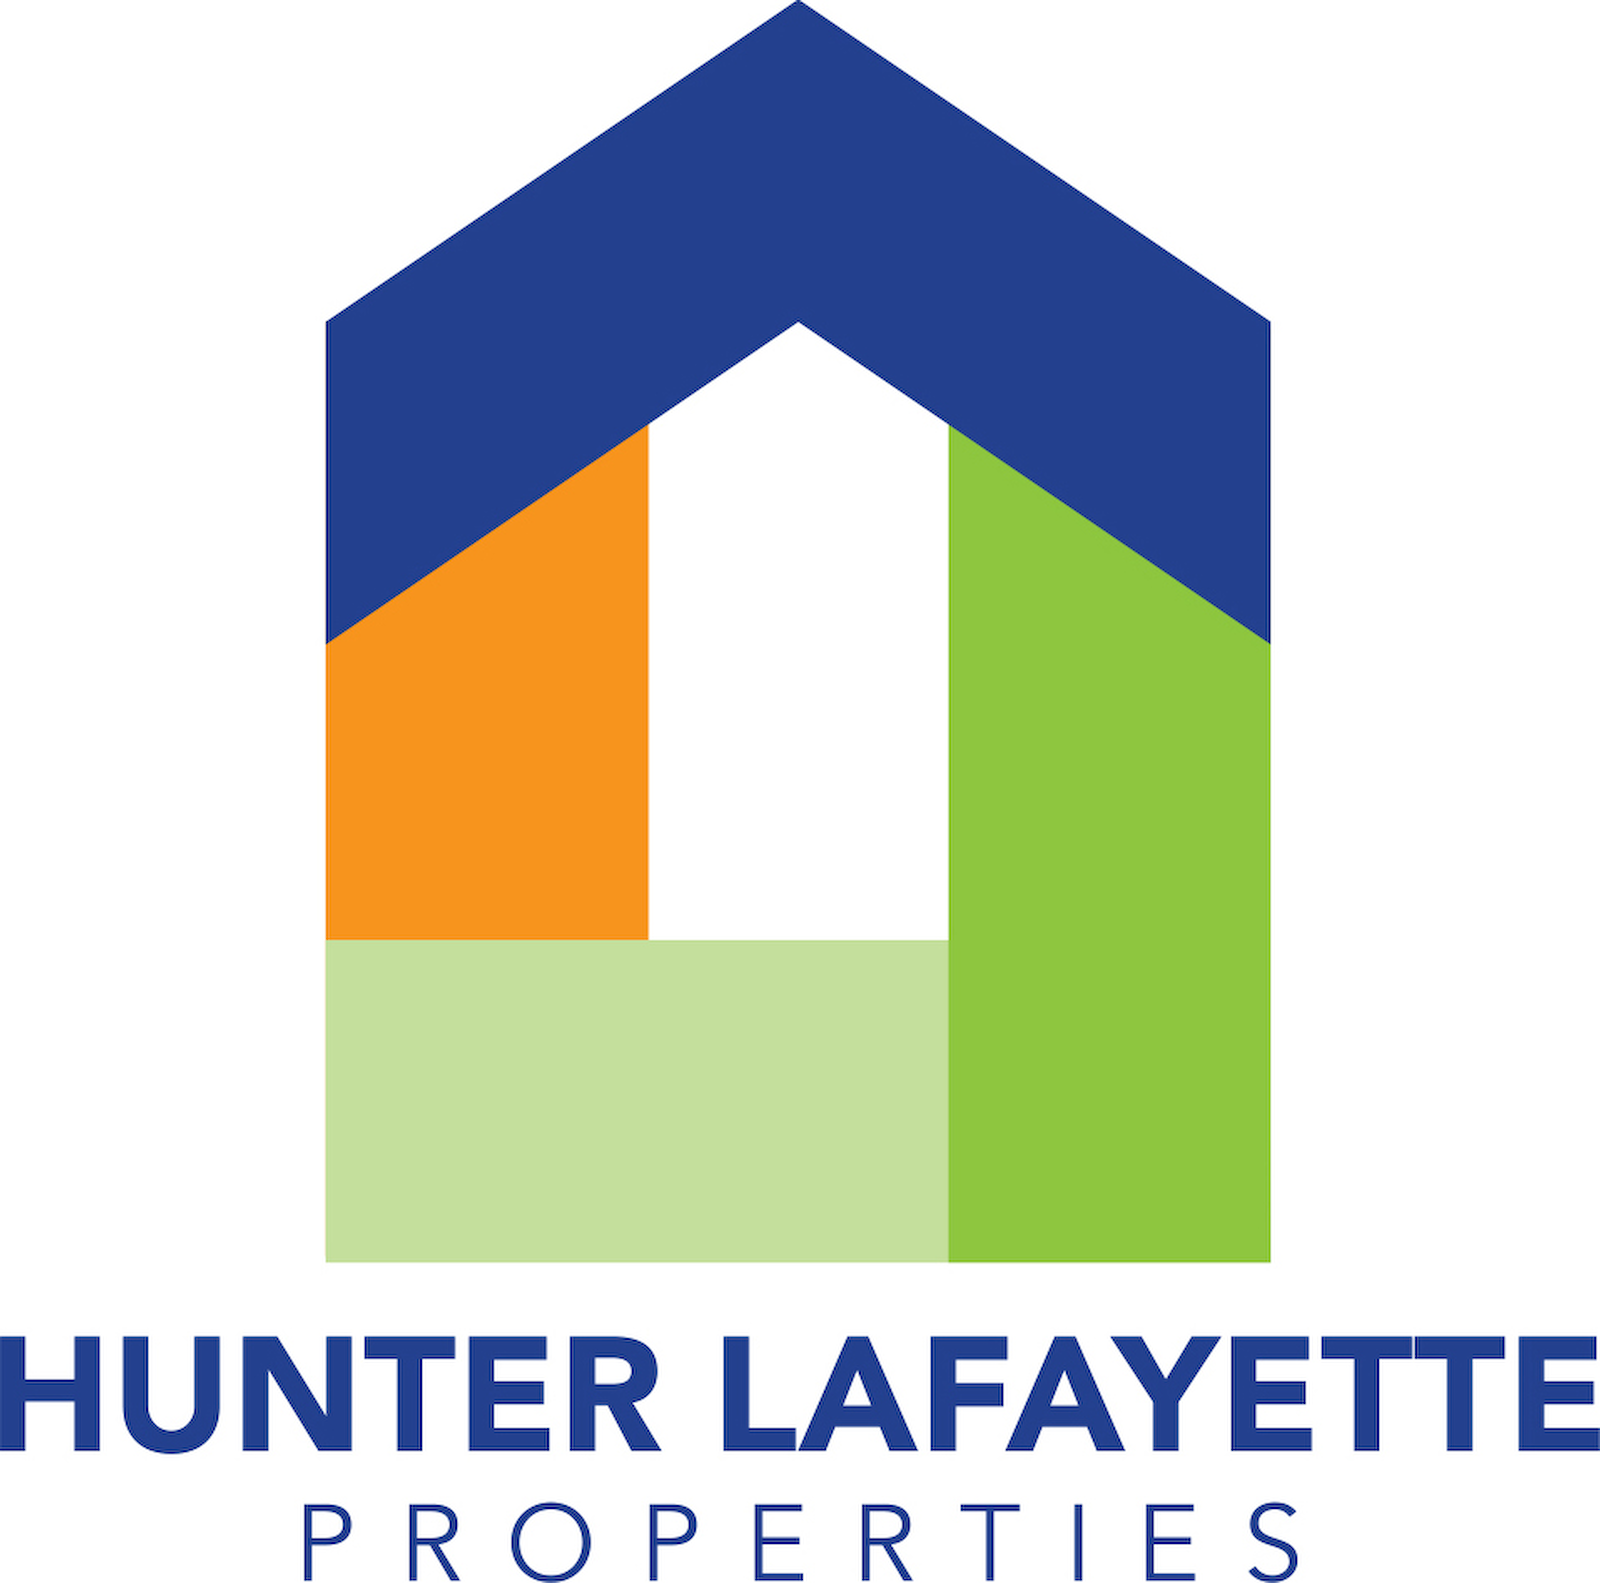 Hunter Lafayette Properties